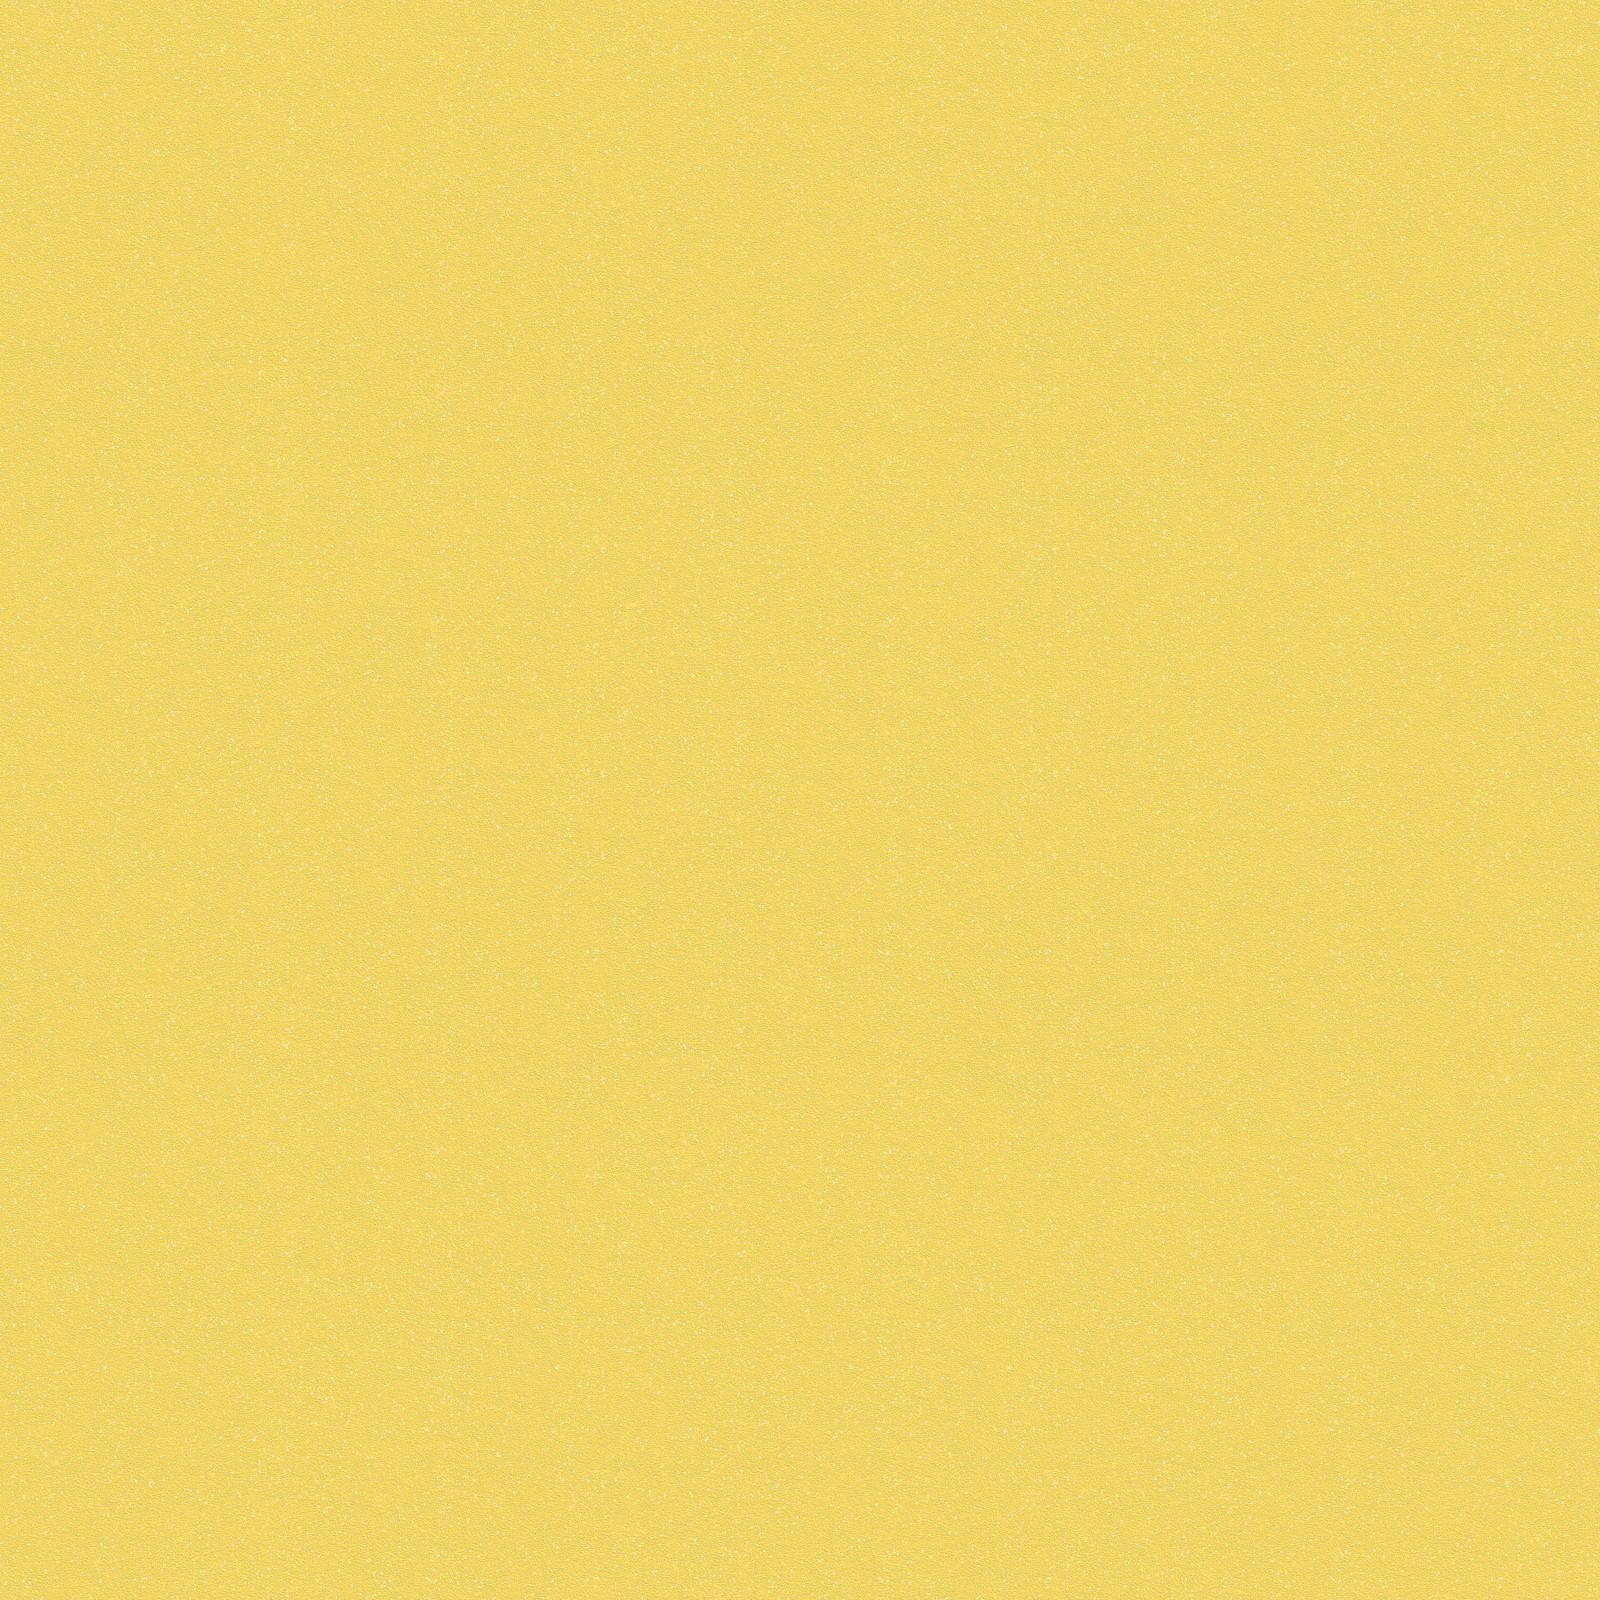 VLIESTAPETE  - Gelb, Basics, Papier/Kunststoff (52/1005cm)